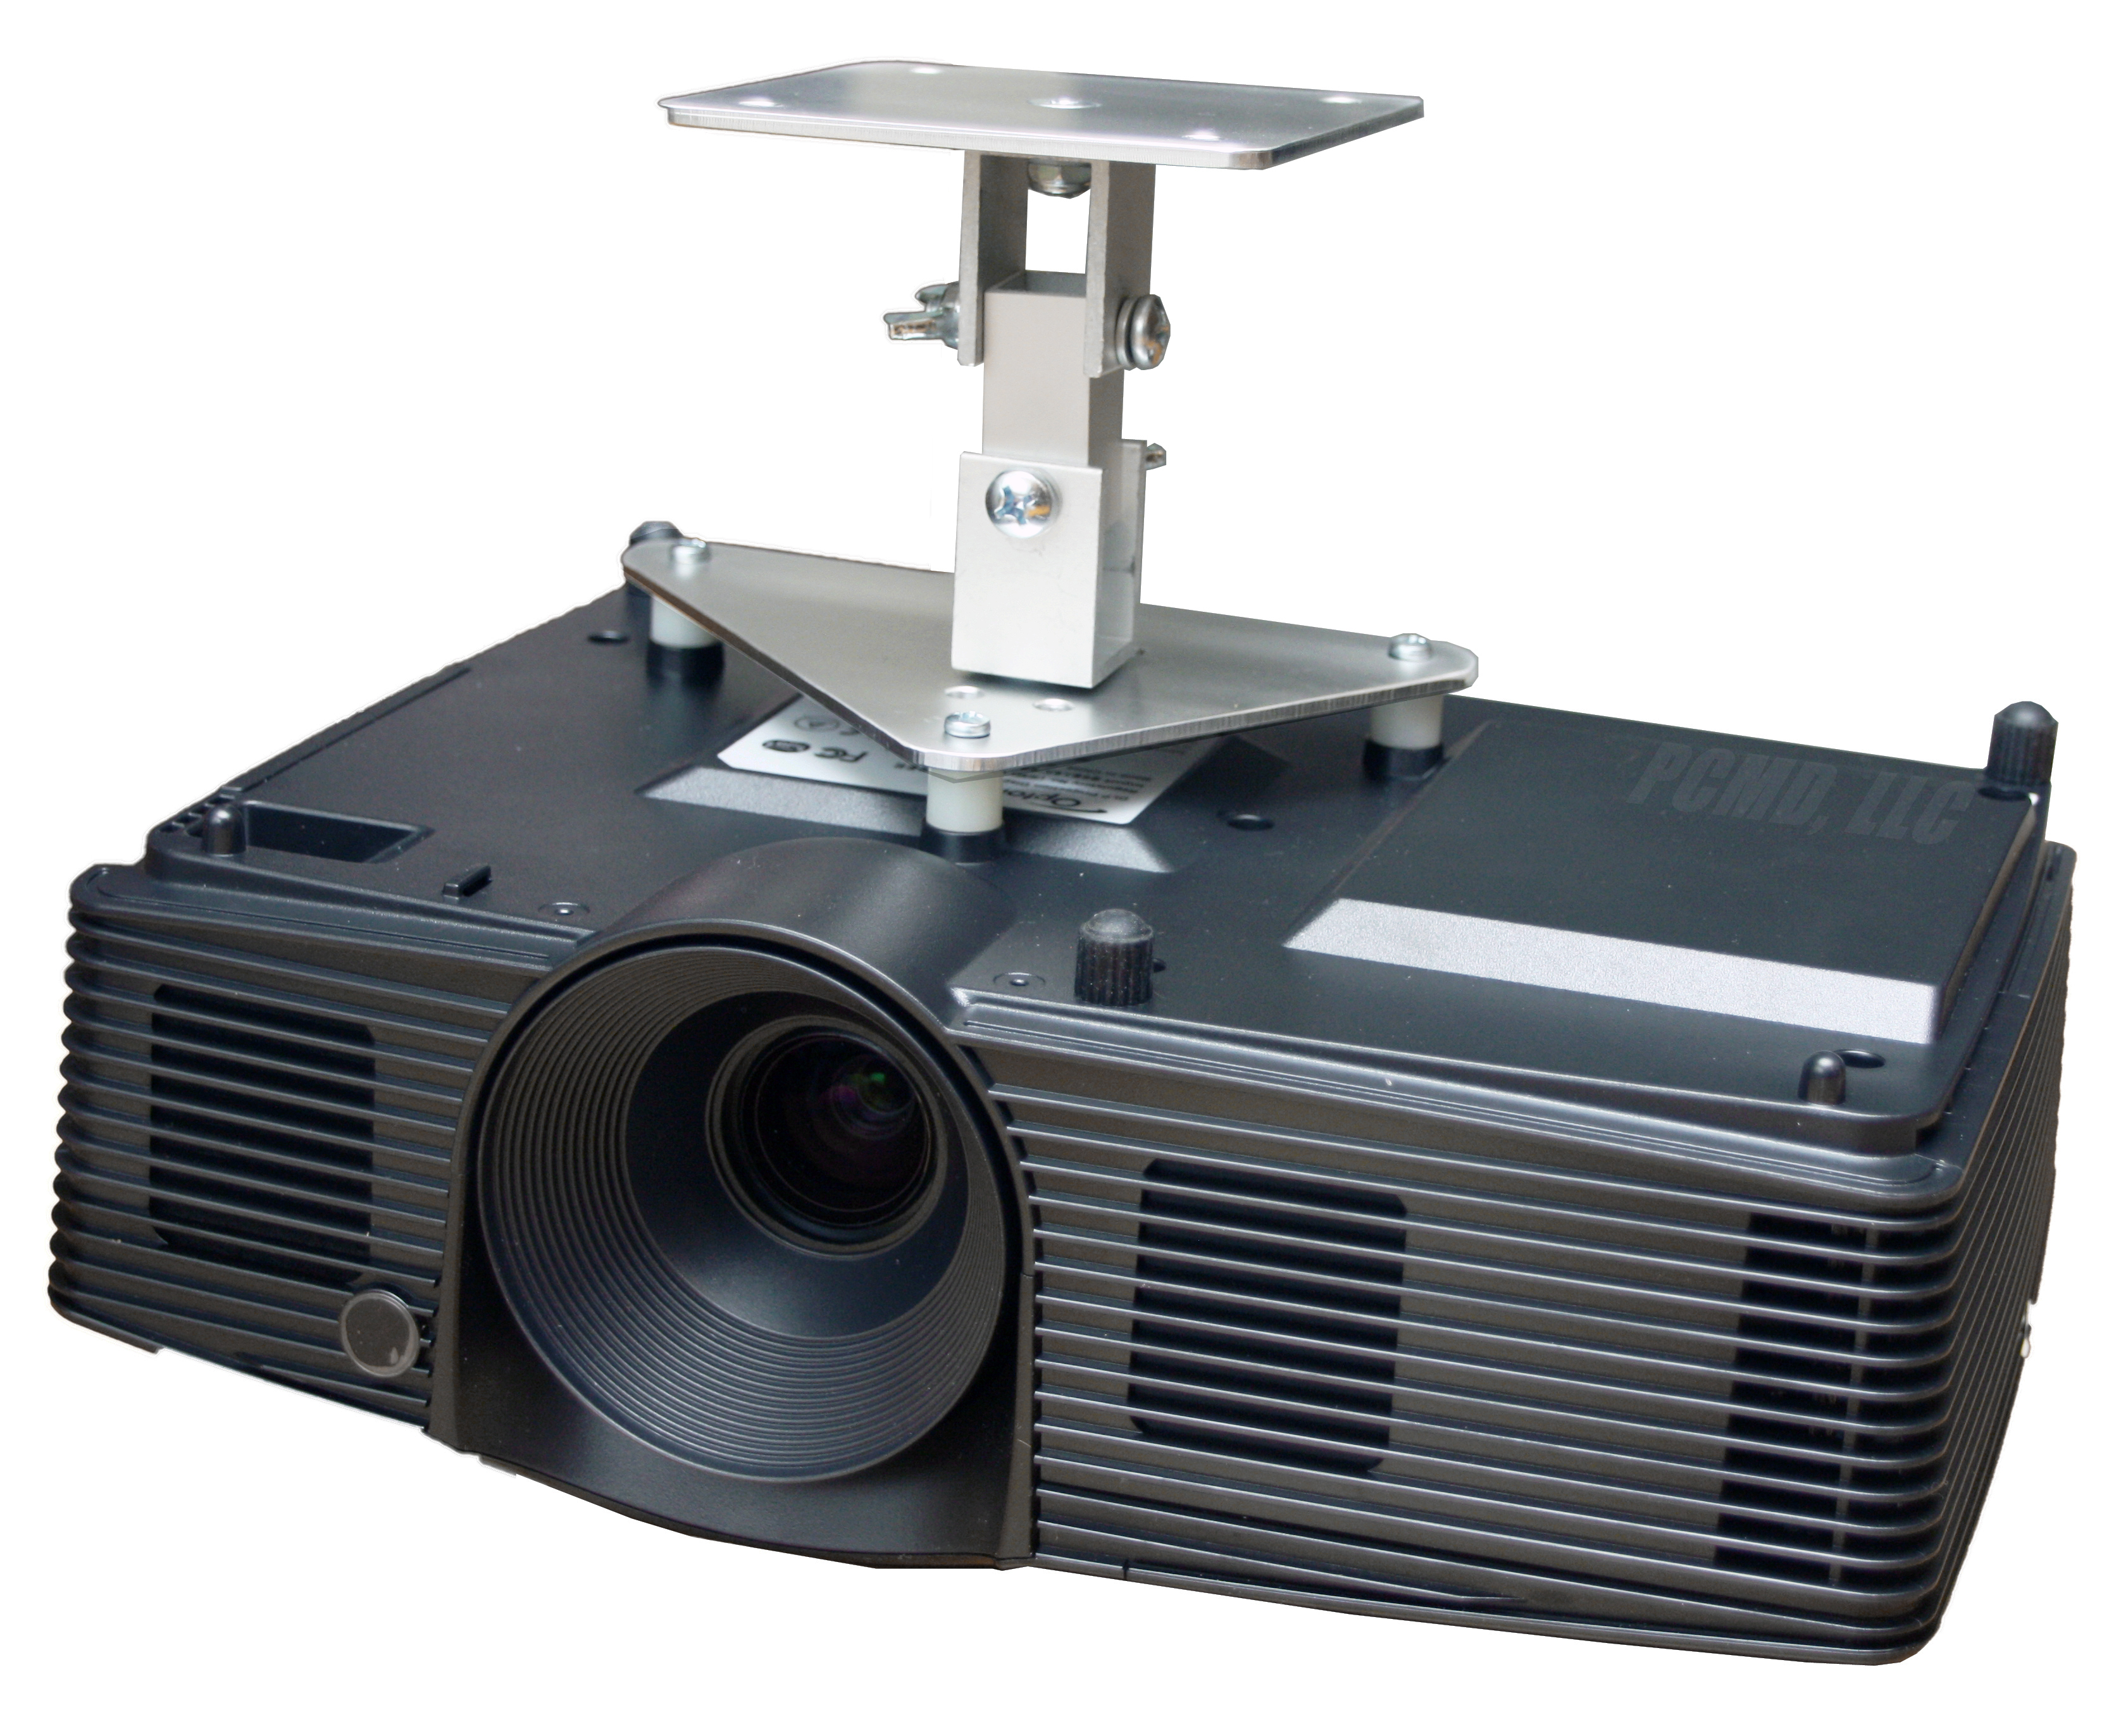 PCMD, LLC. Projector Ceiling Mount for Panasonic PT-CW331RU CX300 CX300U CX301R CX301RU